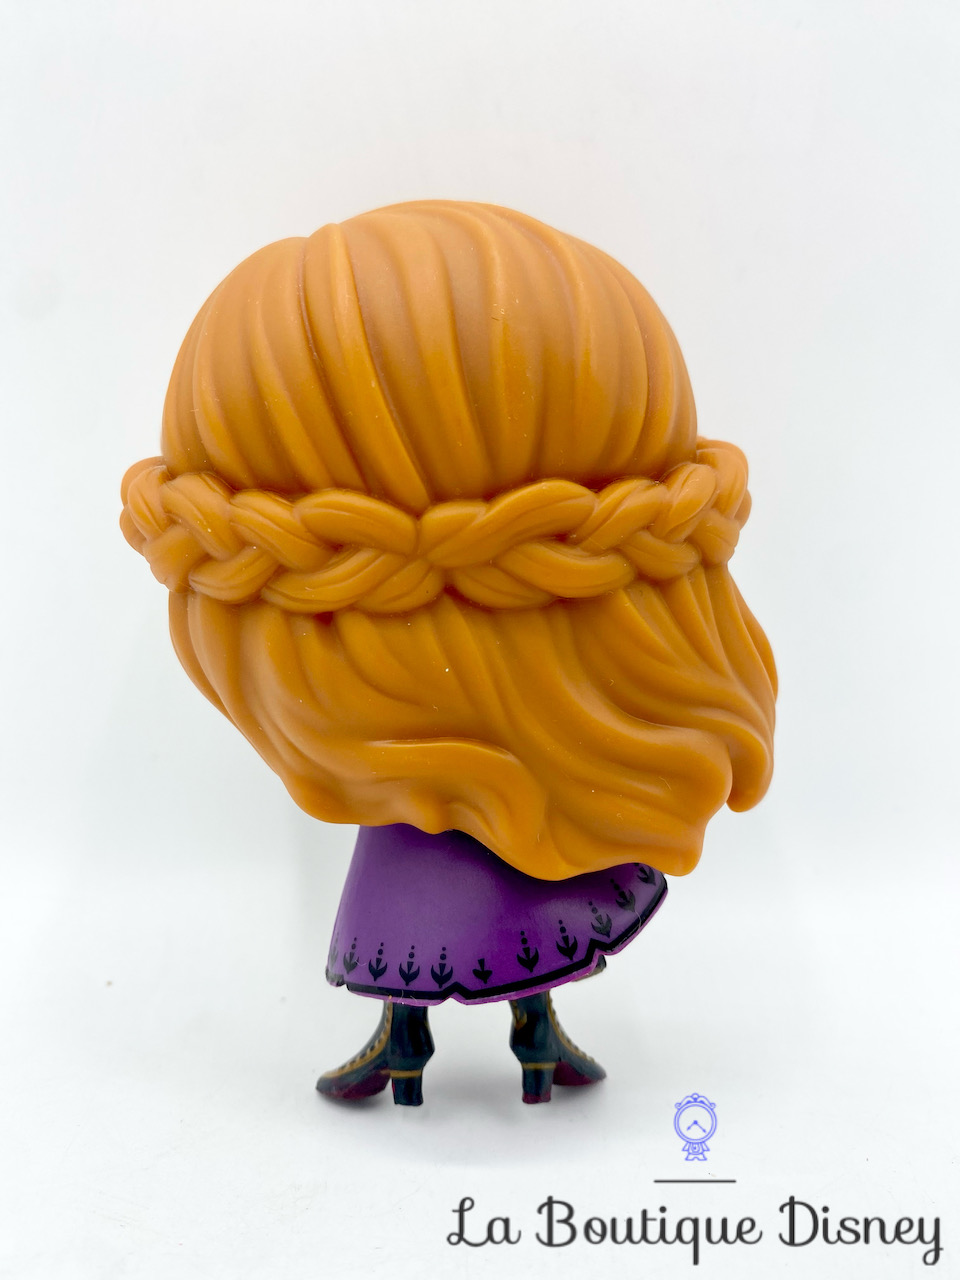 Figurine Funko POP! de Anna (582) La Reine des Neiges 2